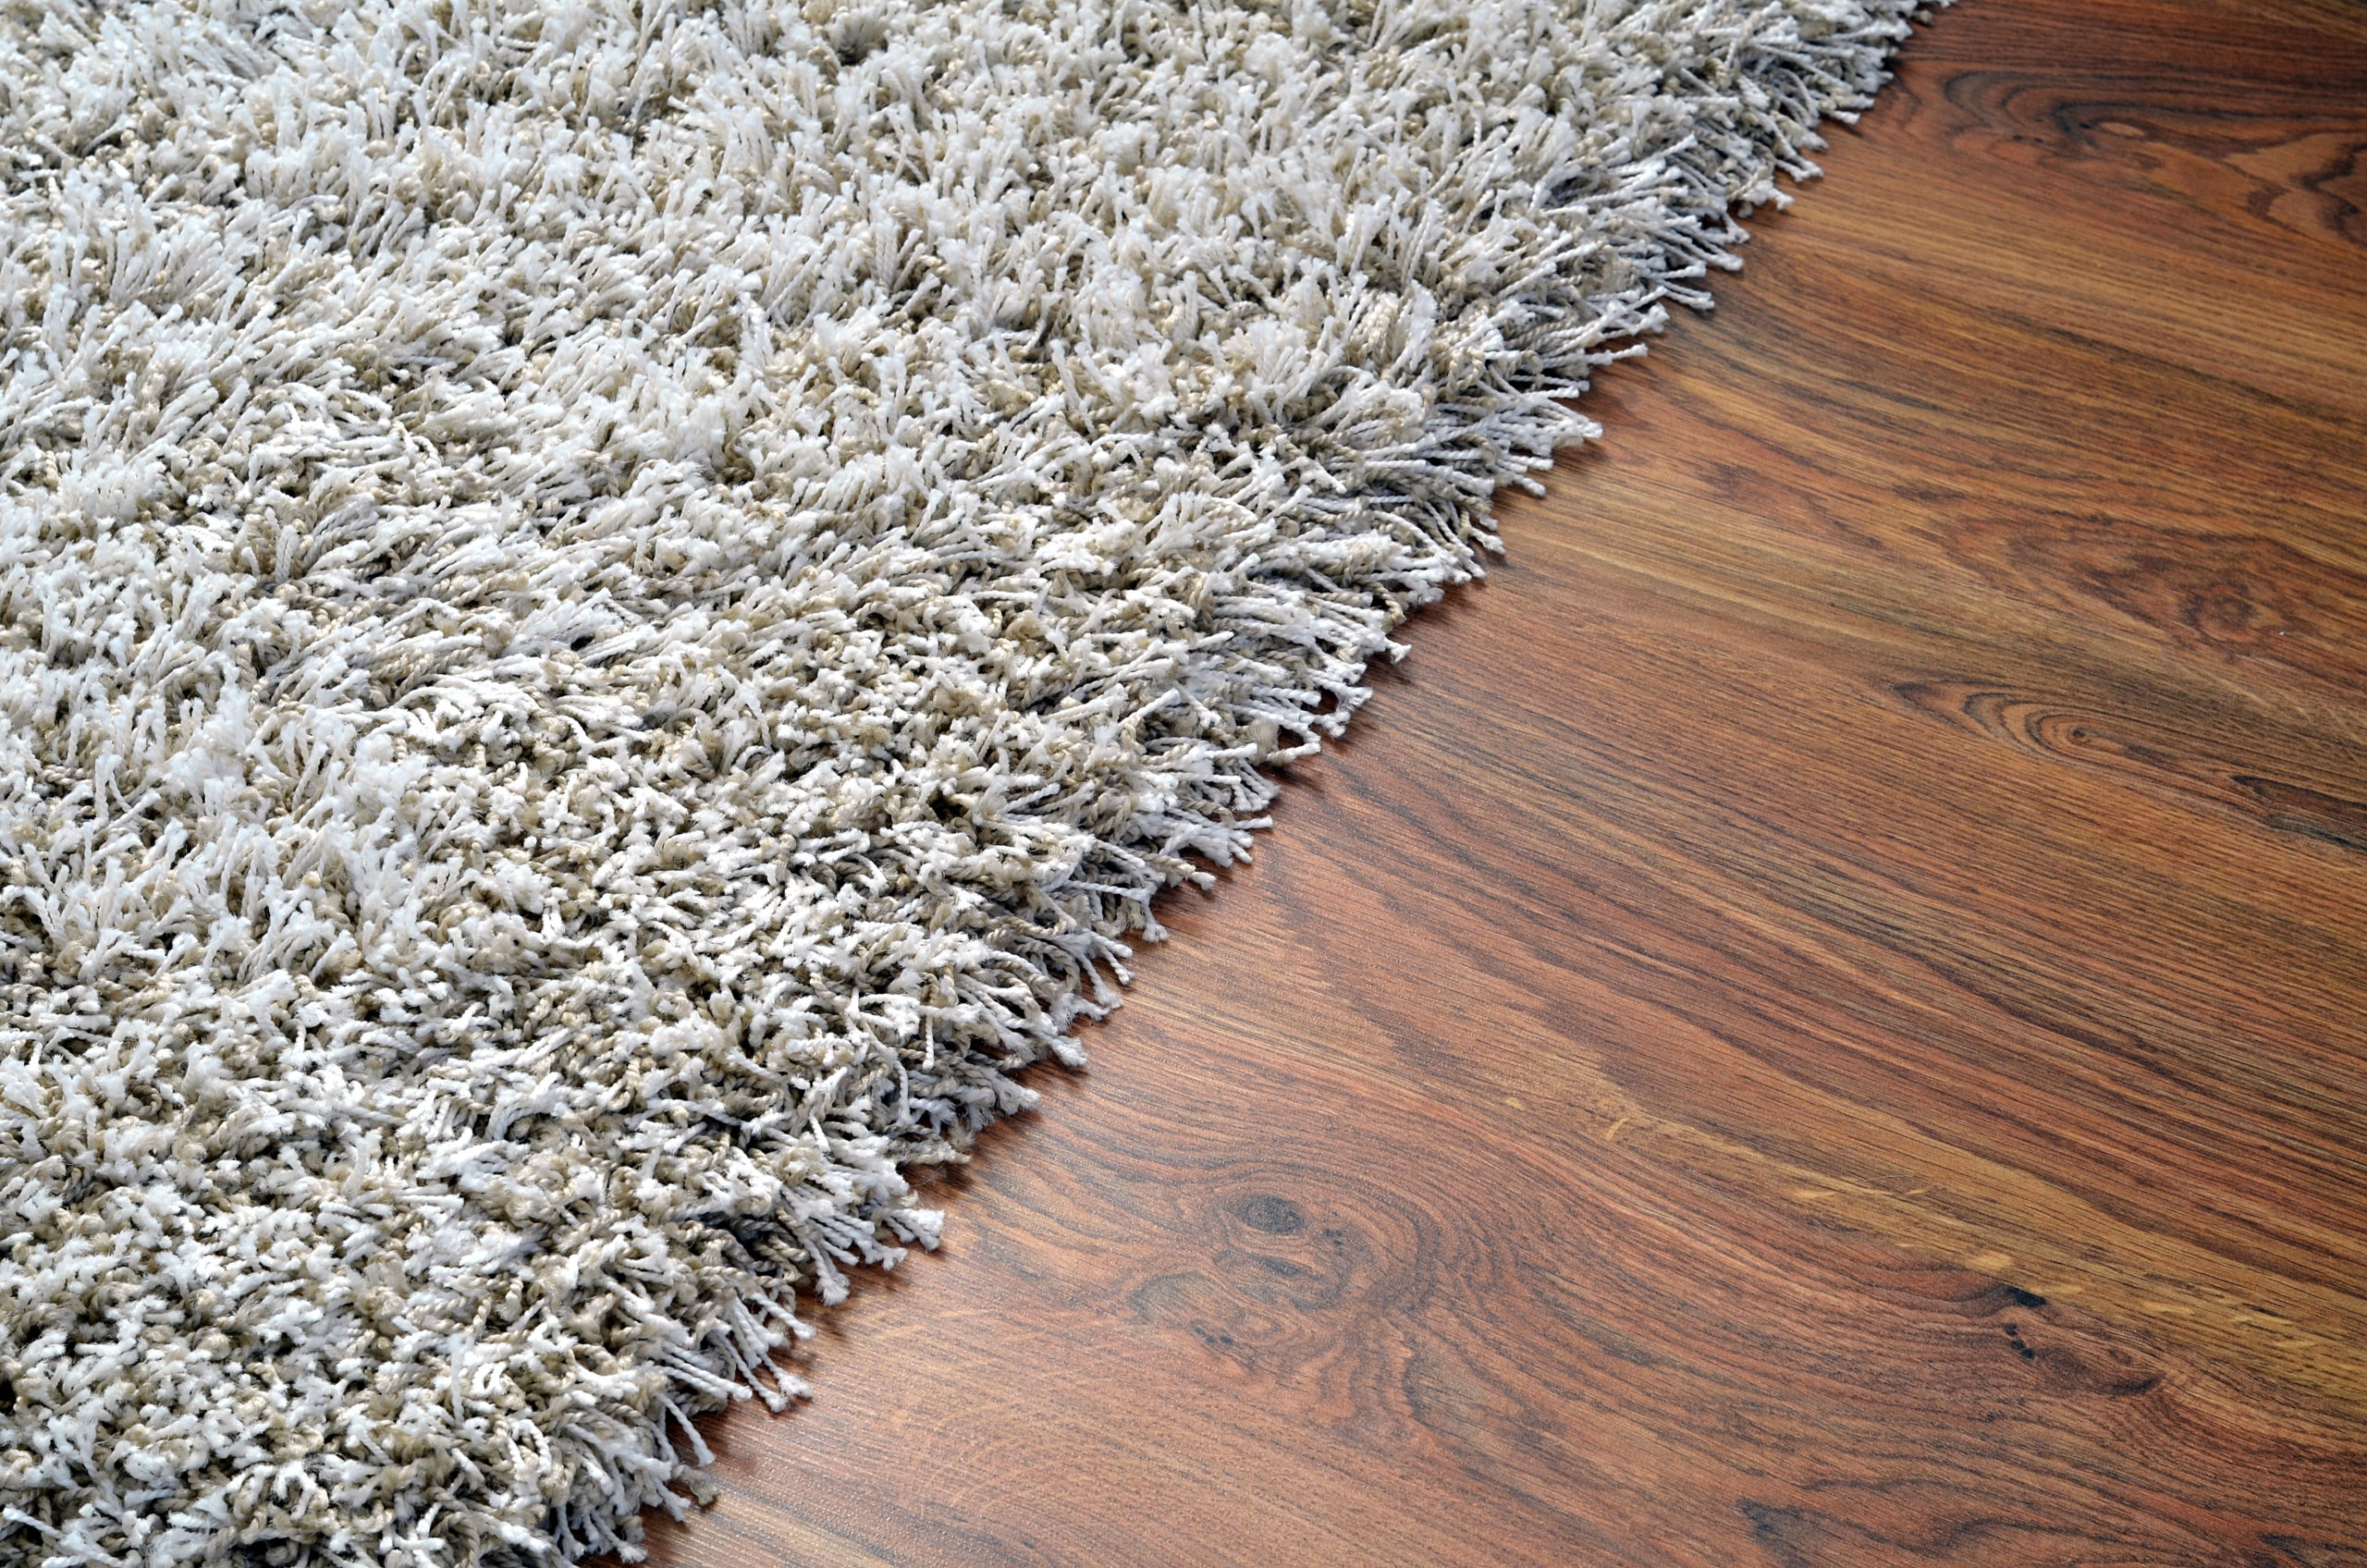 Carpet Or Hard Floor Diamond, Cost Of Laminate Flooring Vs Carpet